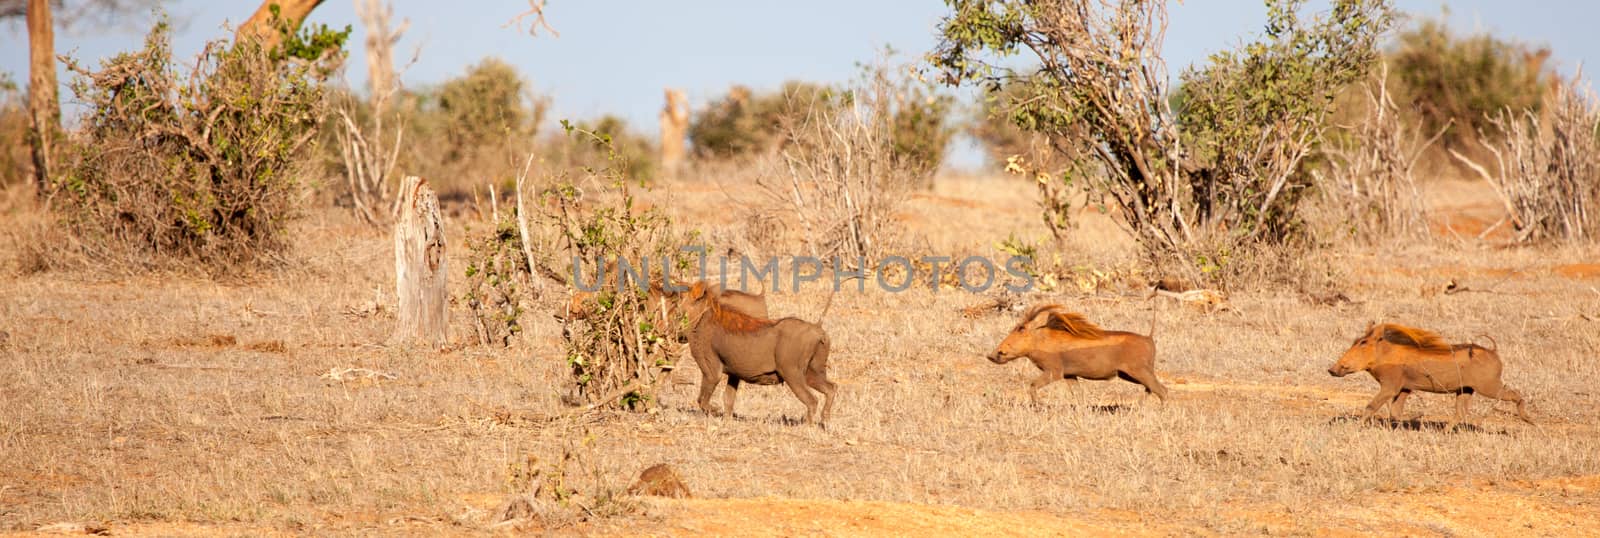 Wild boar running through the savannah of Kenya by 25ehaag6